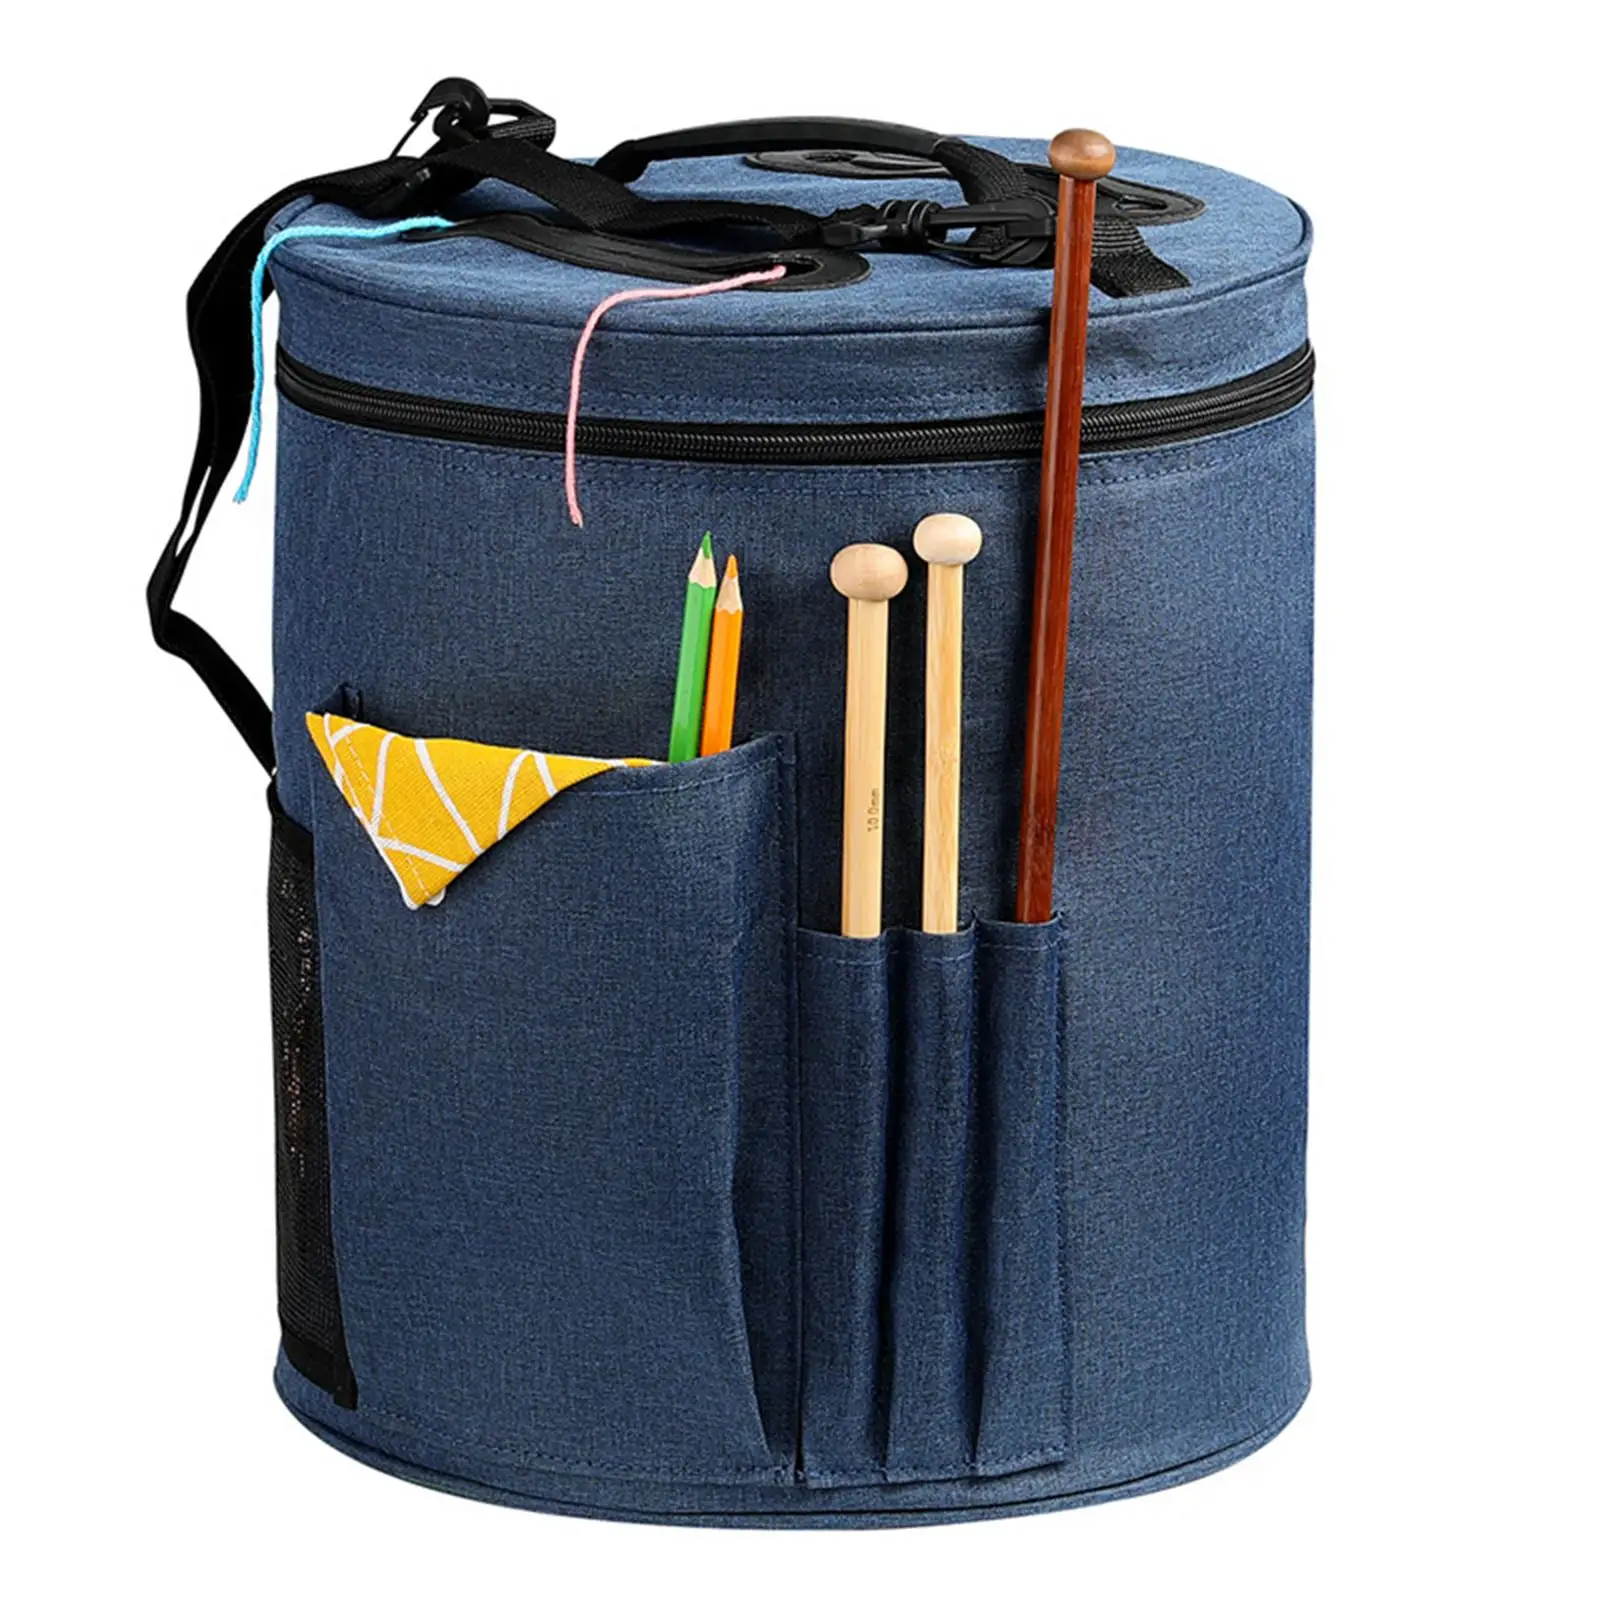 Crochet Bag Yarn Storage Bag with Hole for Crochet Hooks Knitting Pins